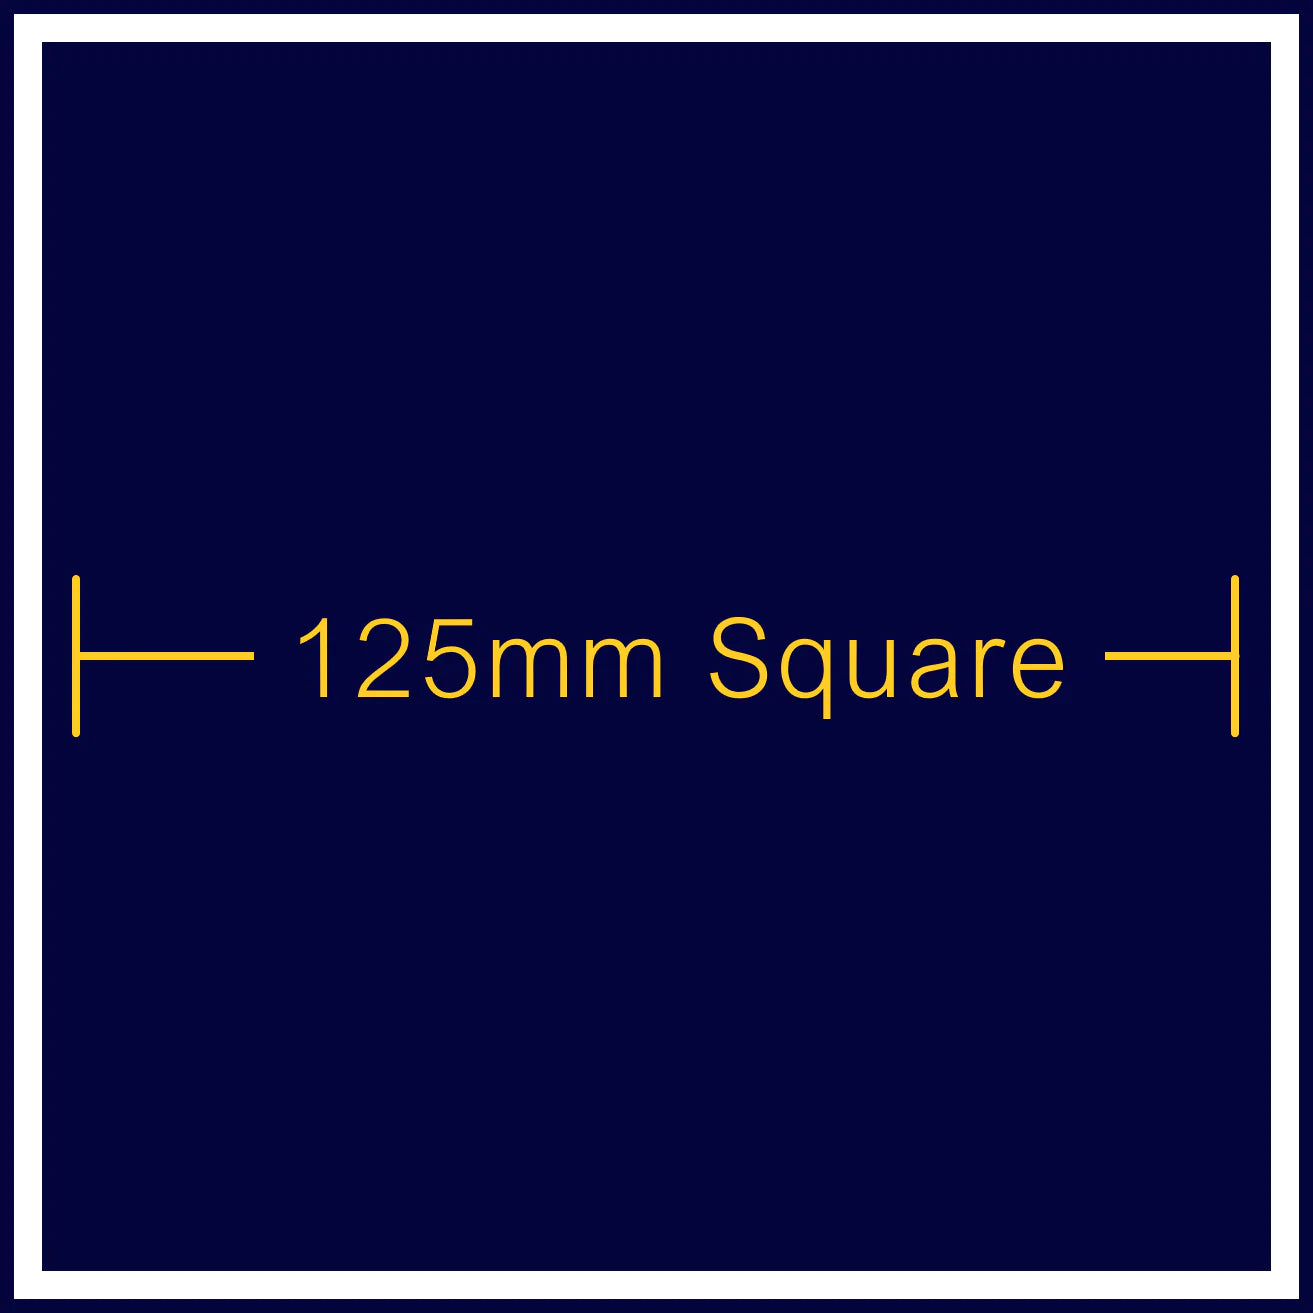 125mm Square Shape